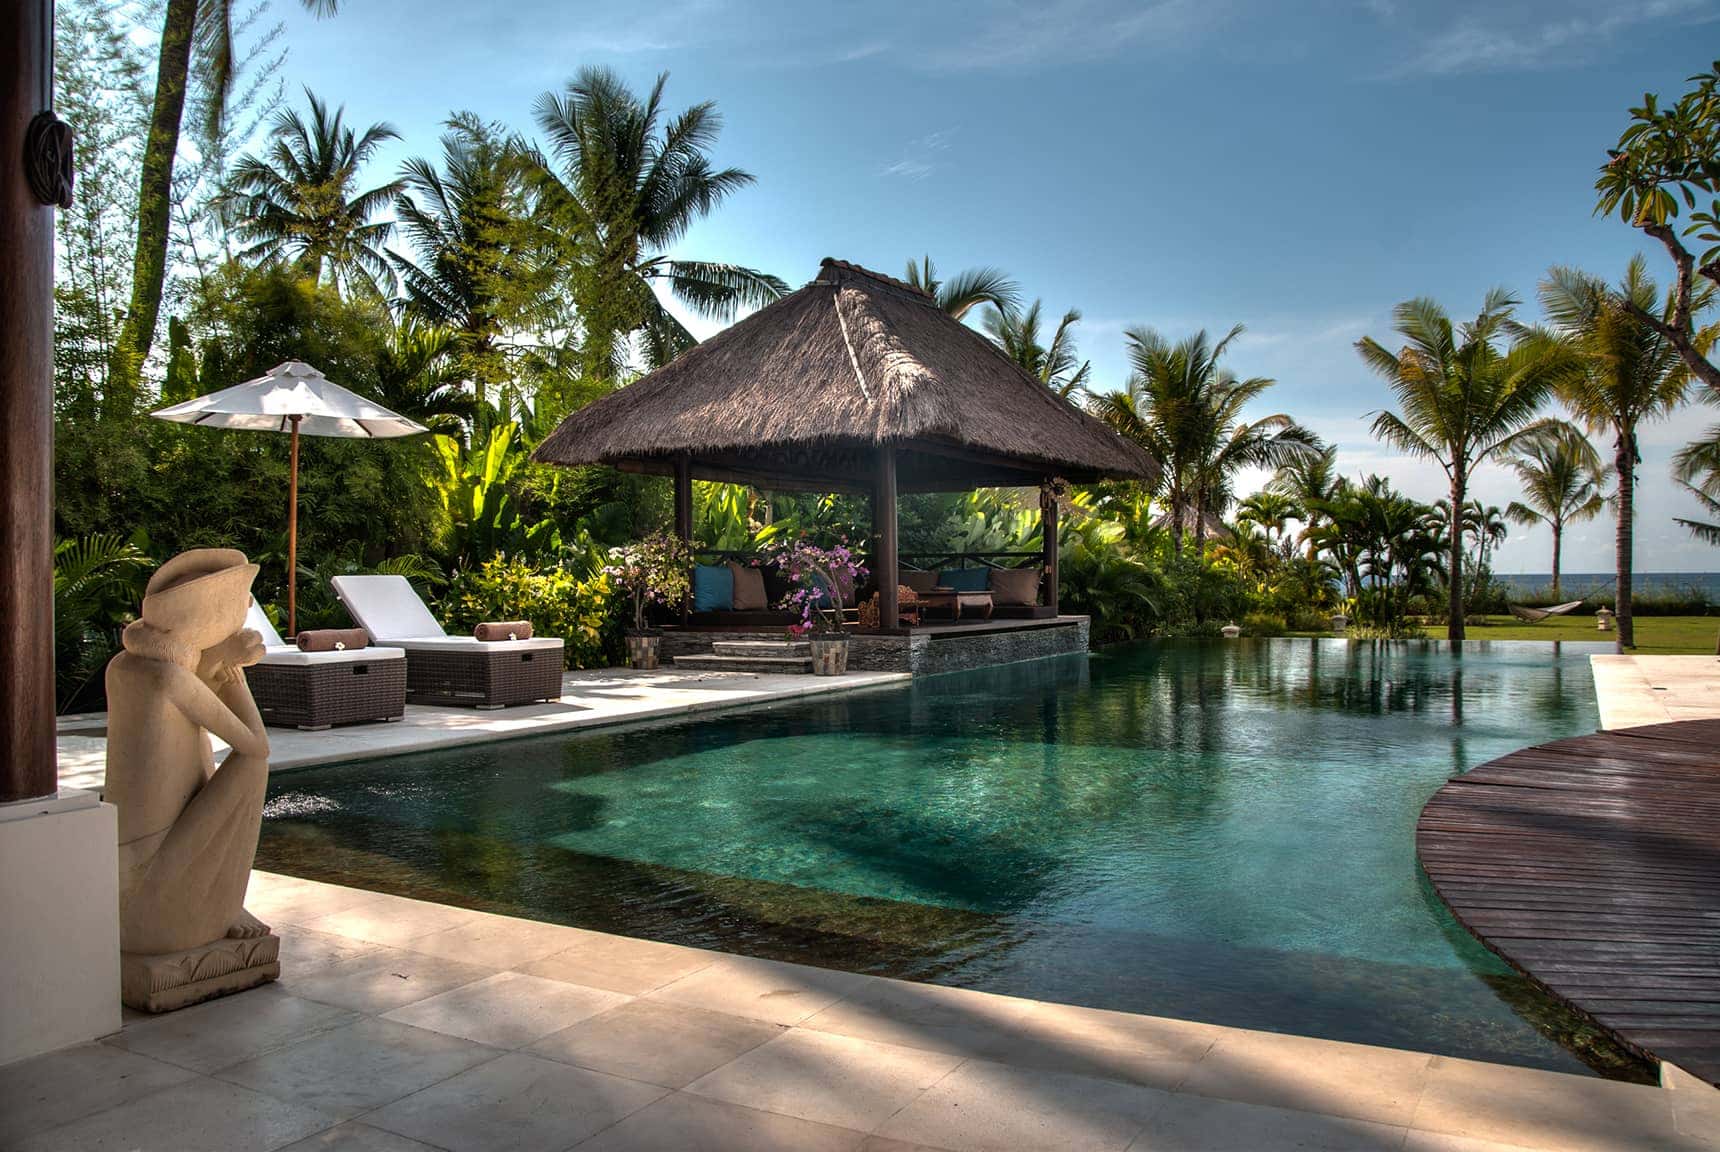 Villa Aparna - Seririt, Bali Indonesia (Bali villa photography by master photographer Rick Carmichael of LuxViz)